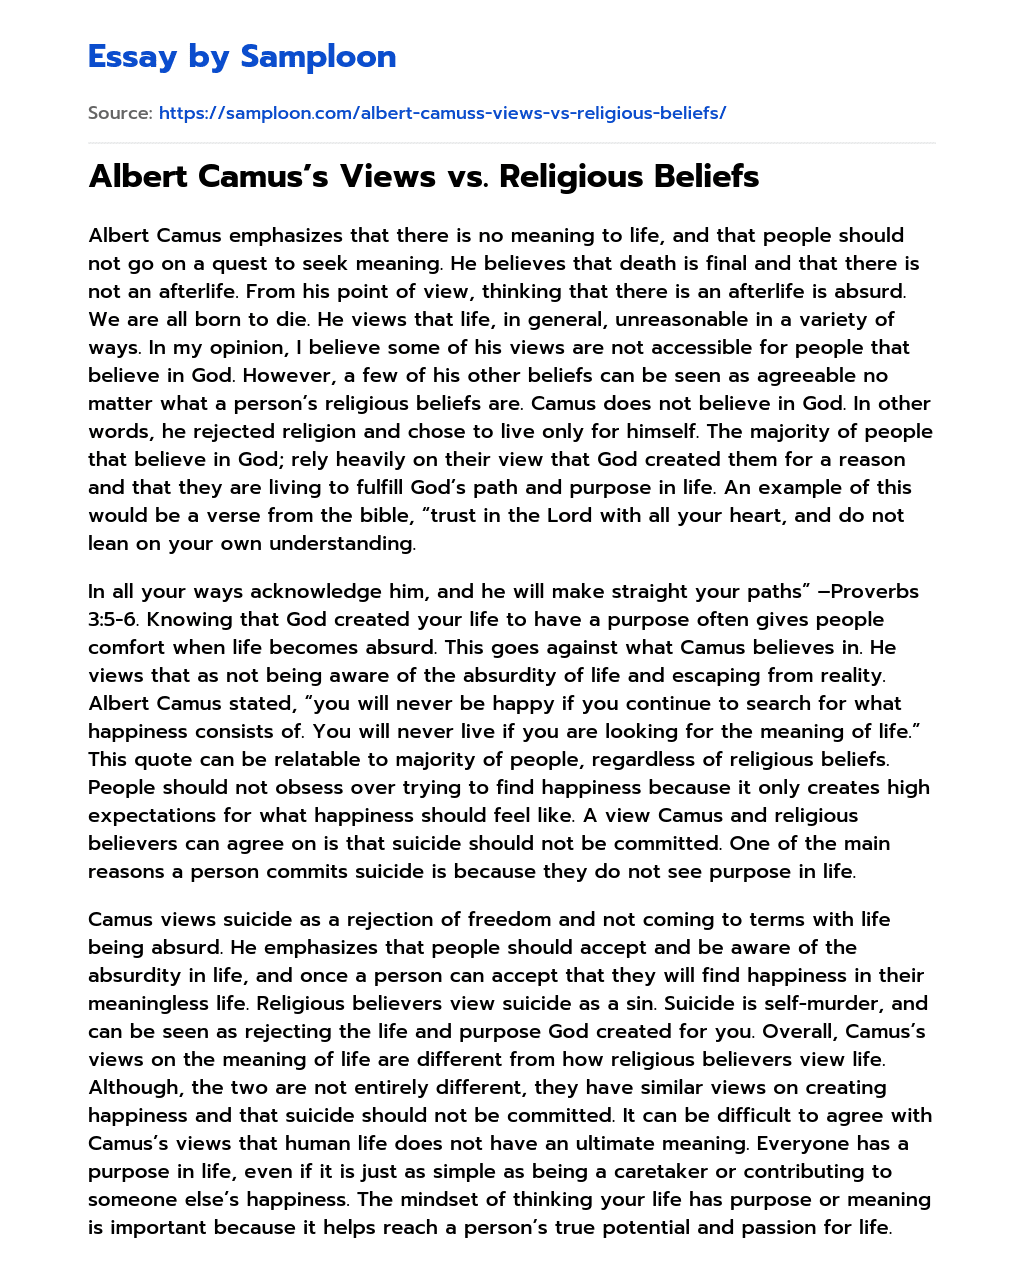 Albert Camus’s Views vs. Religious Beliefs essay